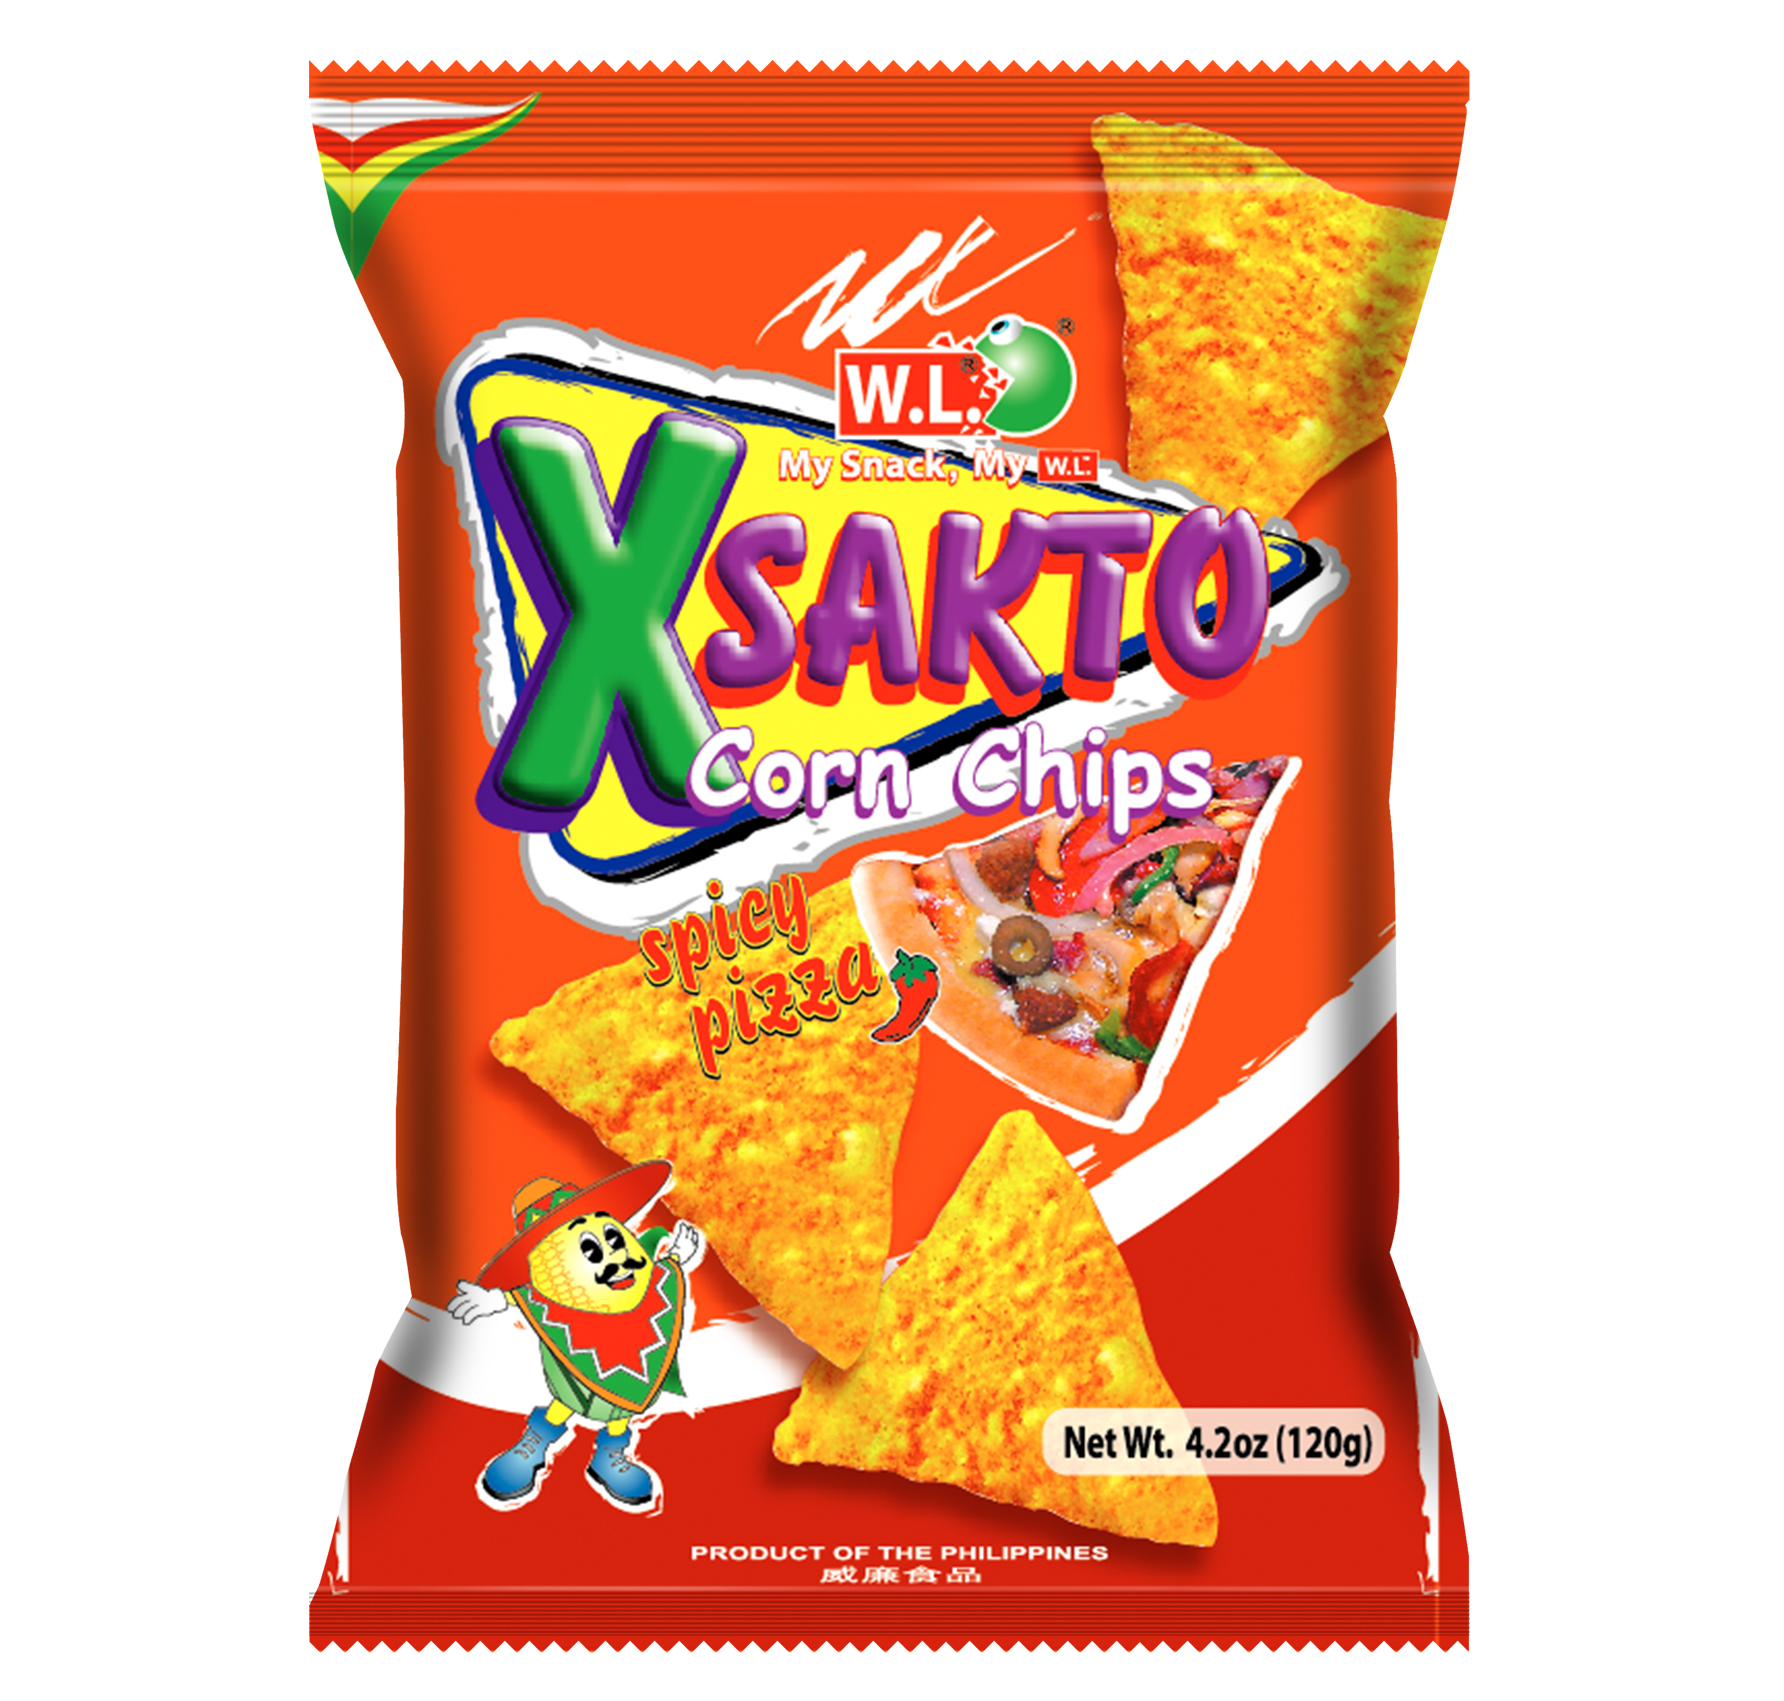 W.L. X sakto corn chips spicy pizza flavour